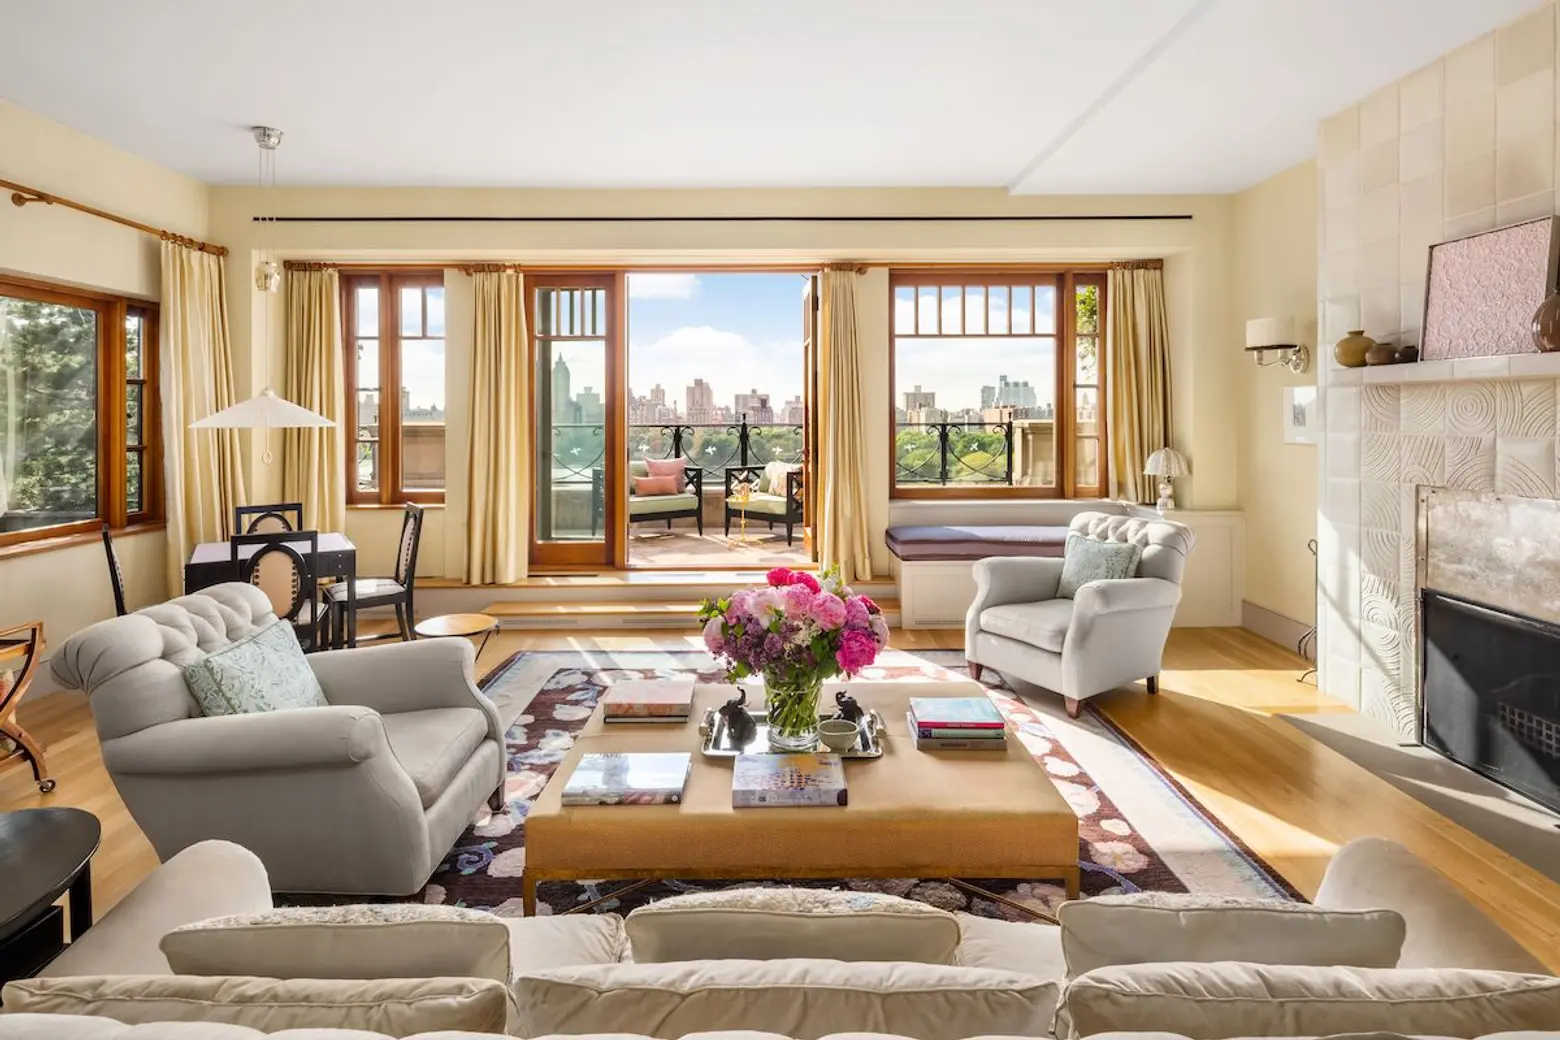 Bette Midler lists her 14-room Upper East Side triplex penthouse for $50M